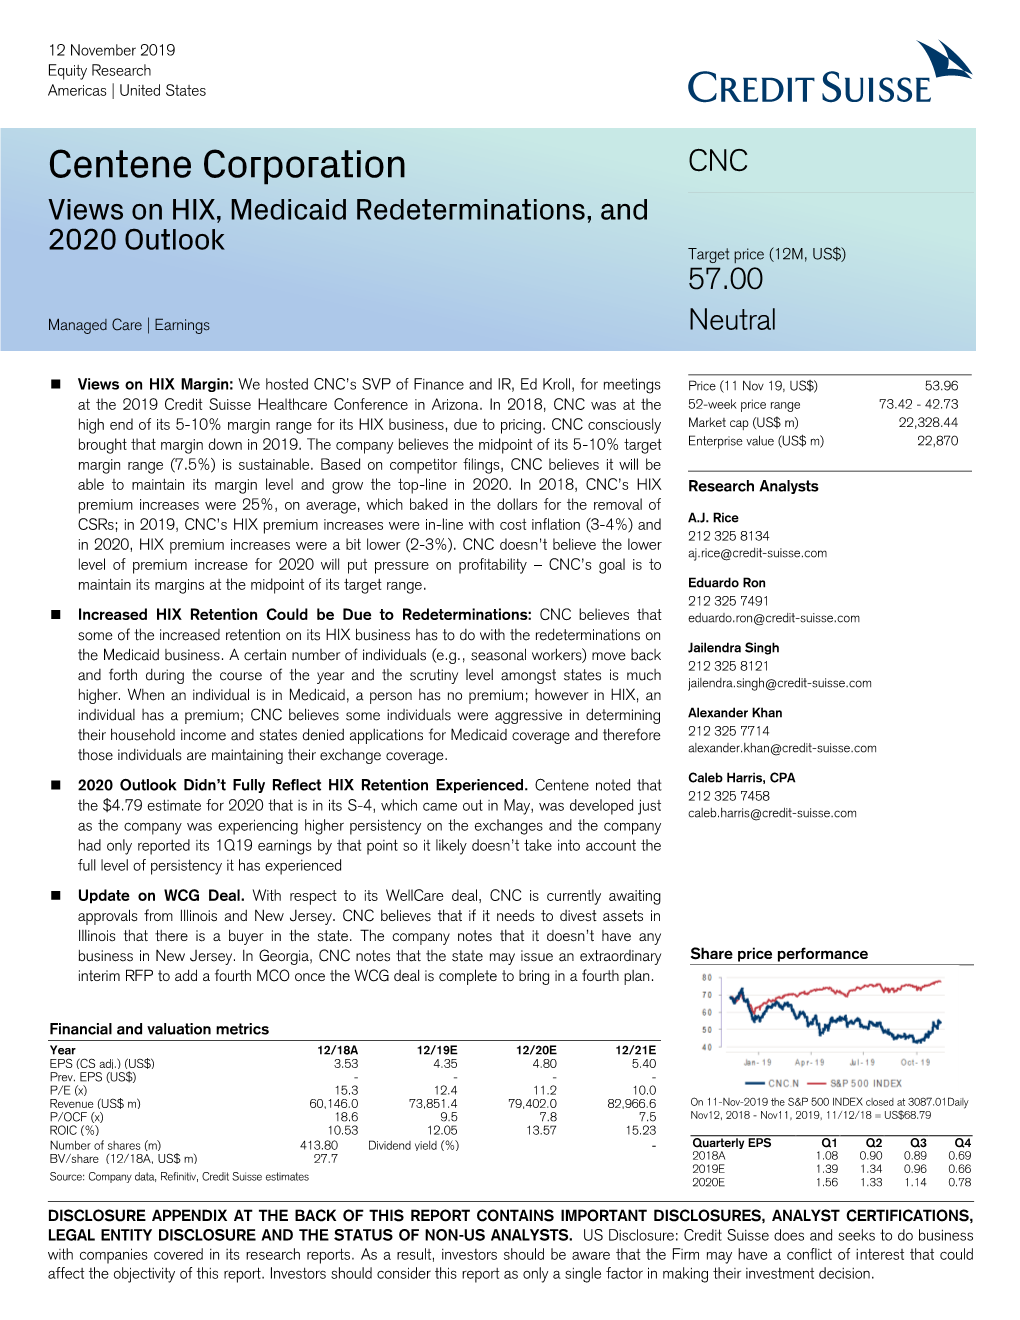 Centene Corporation CNC